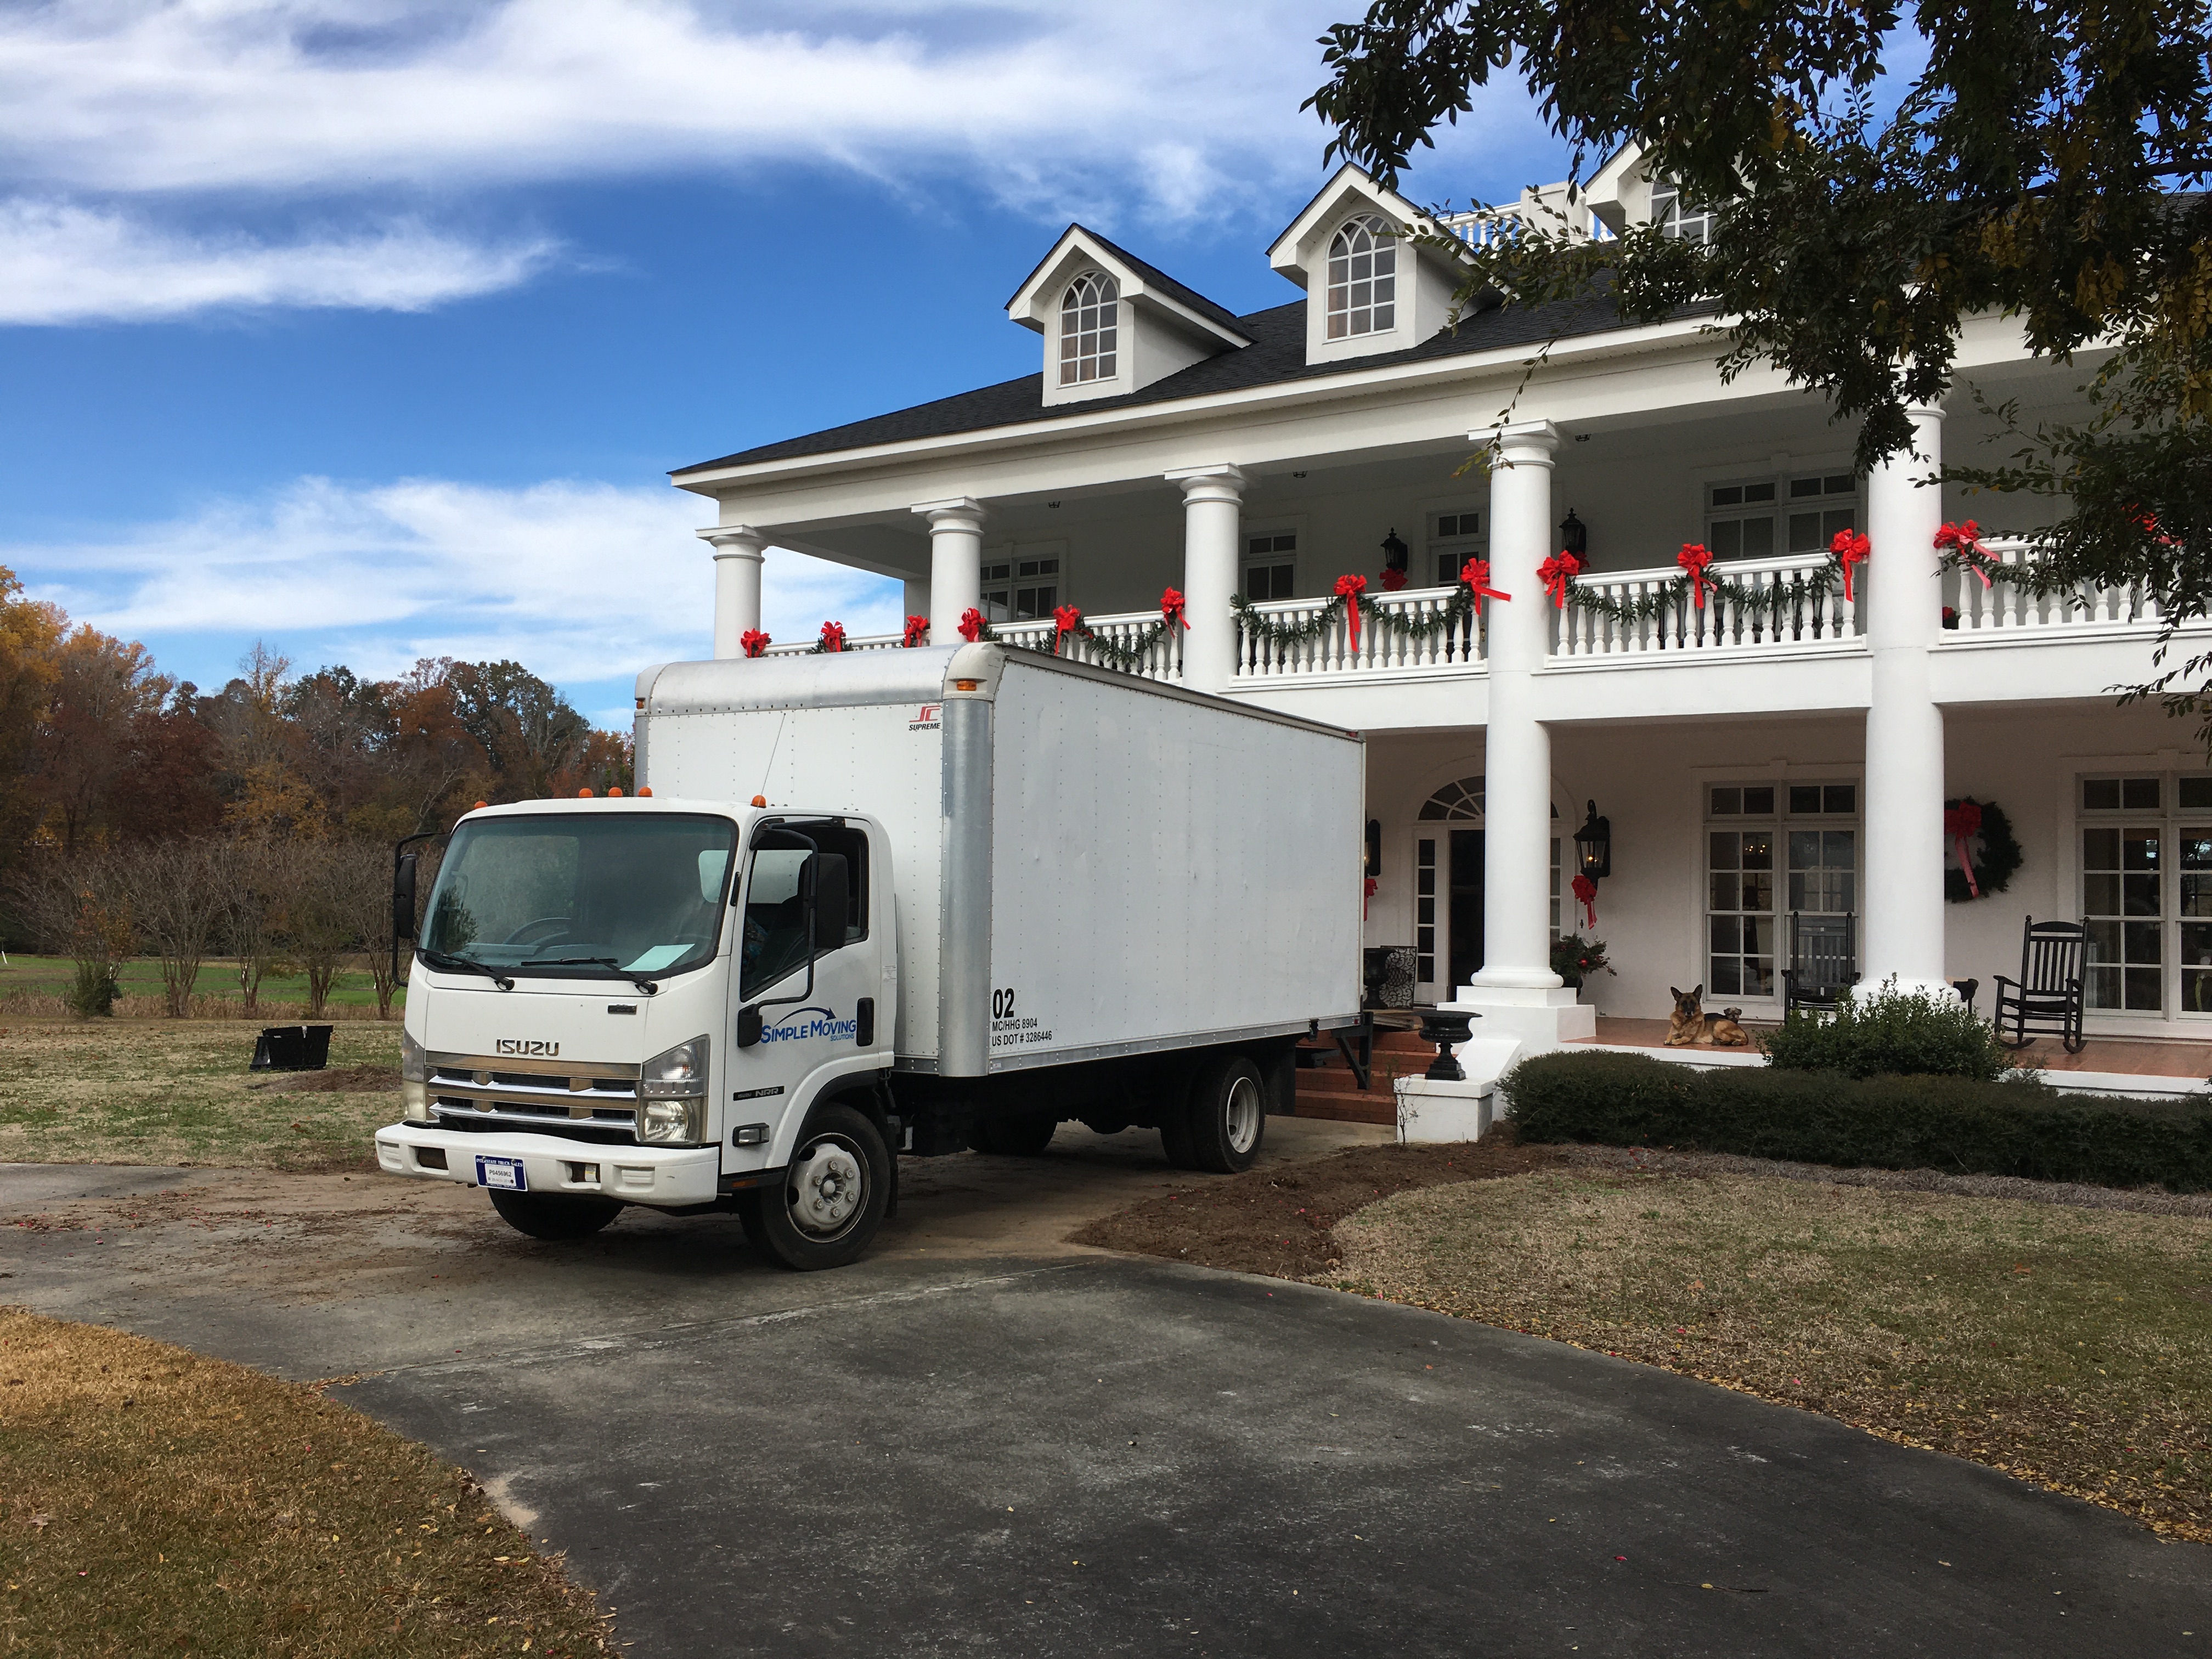 Simple Moving Solutions LLC - Warner Robins Photo